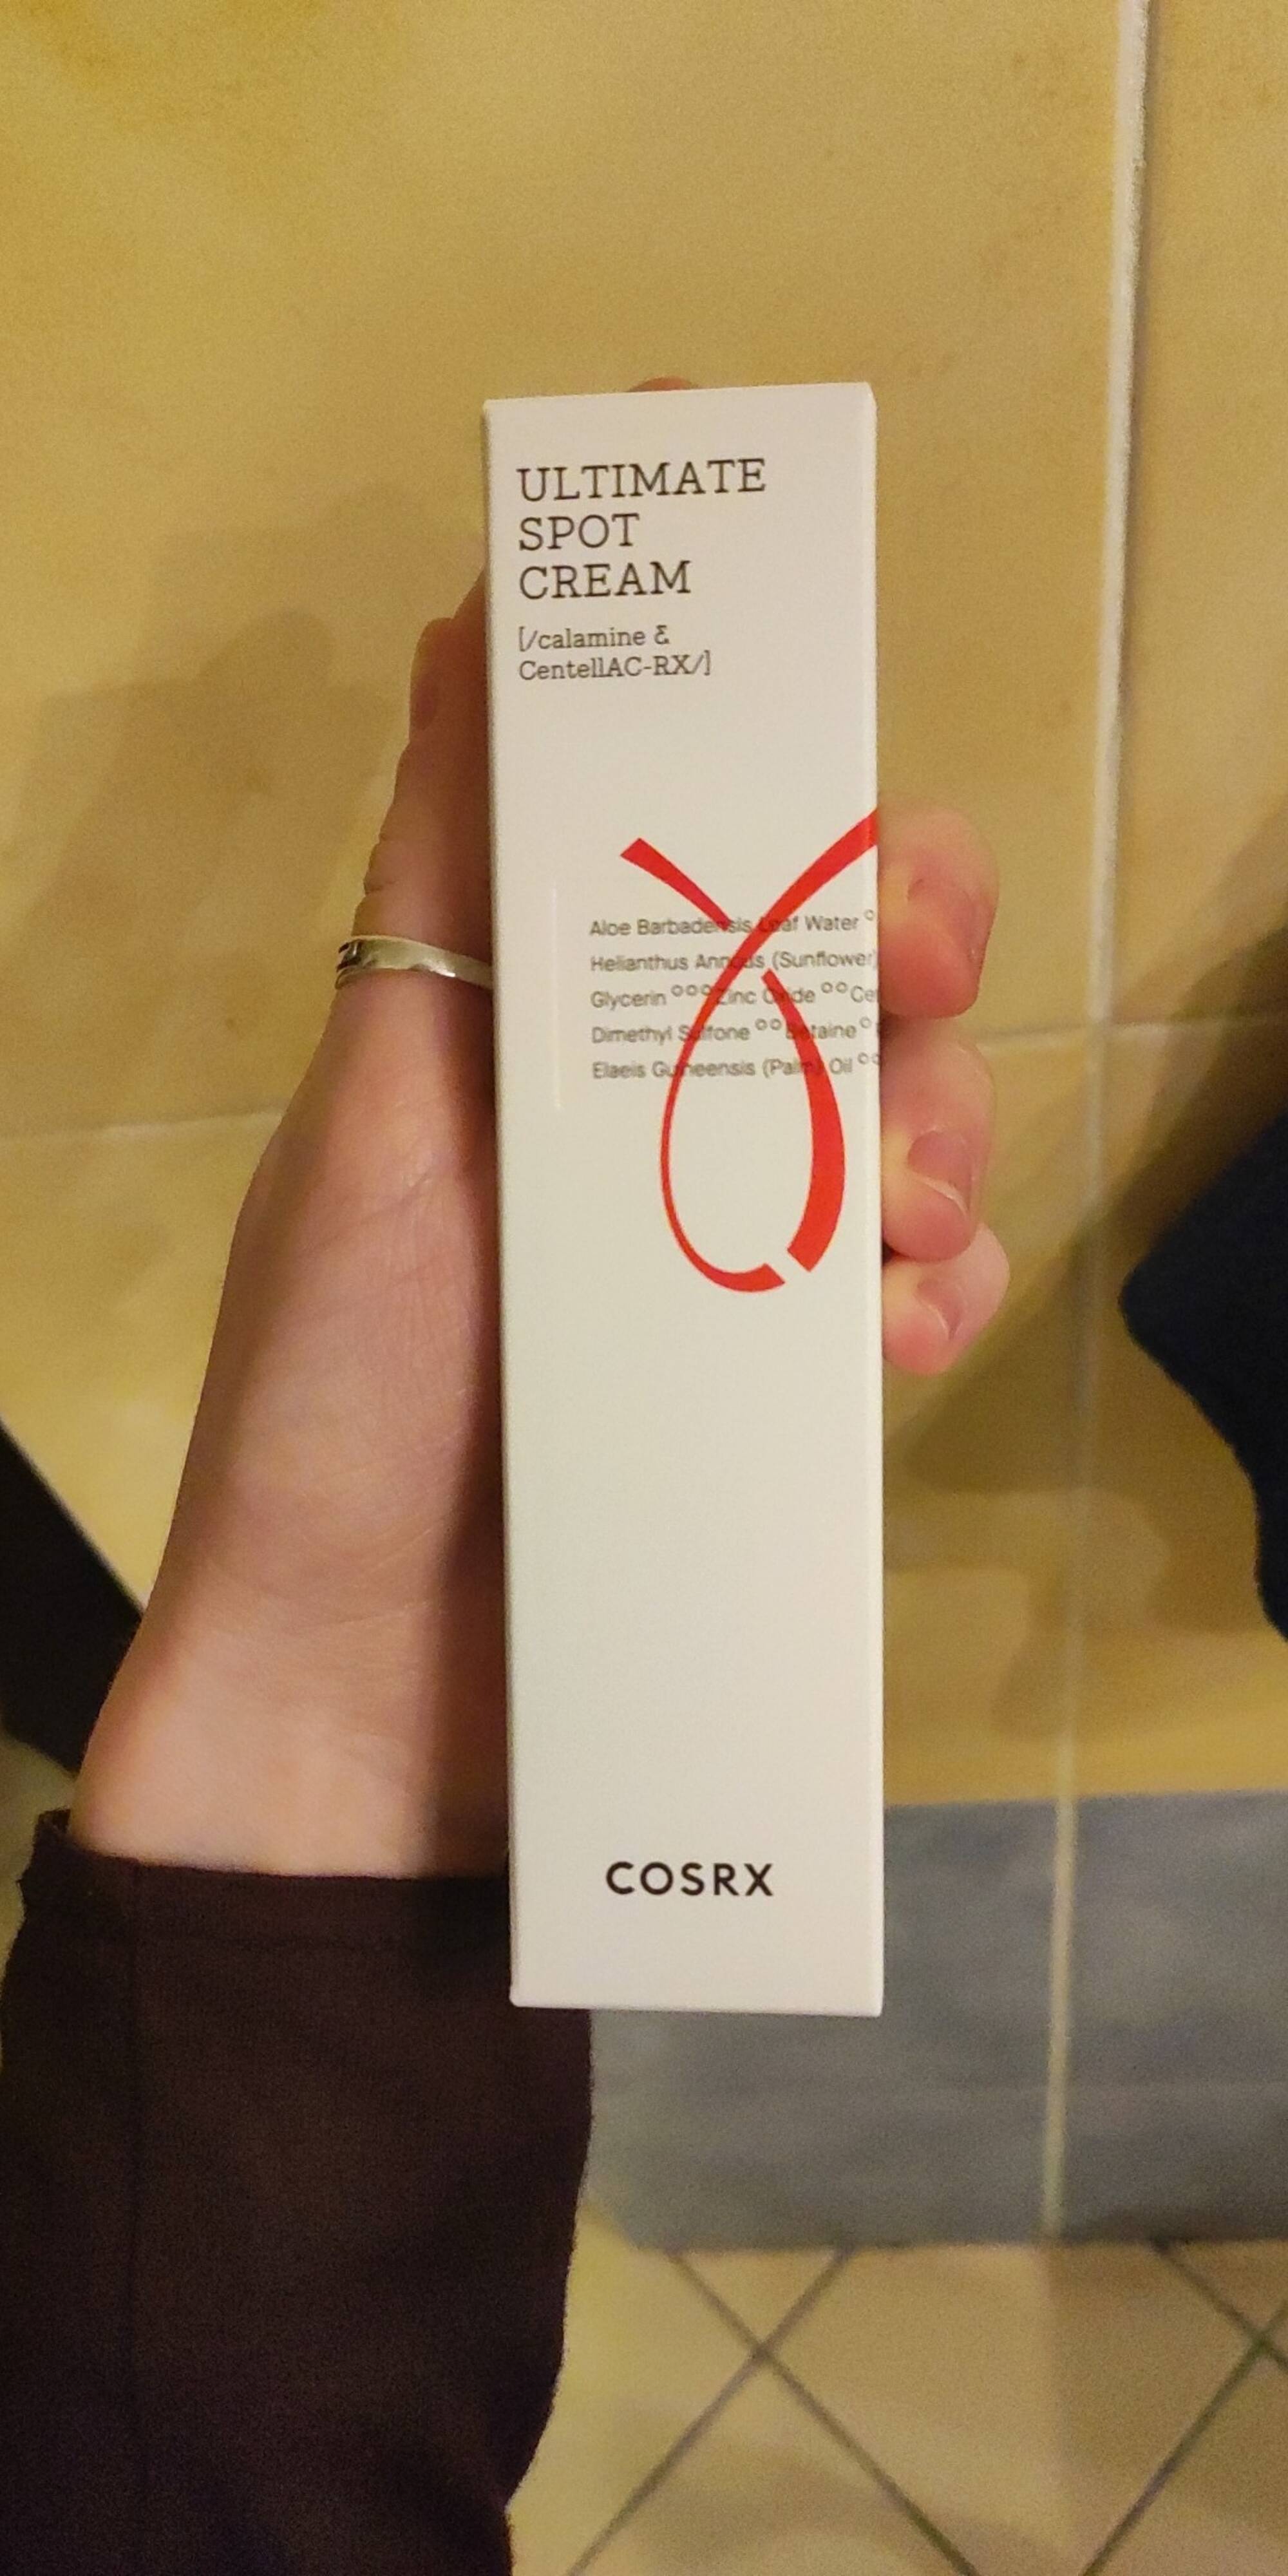 COSRX - Ultimate spot cream